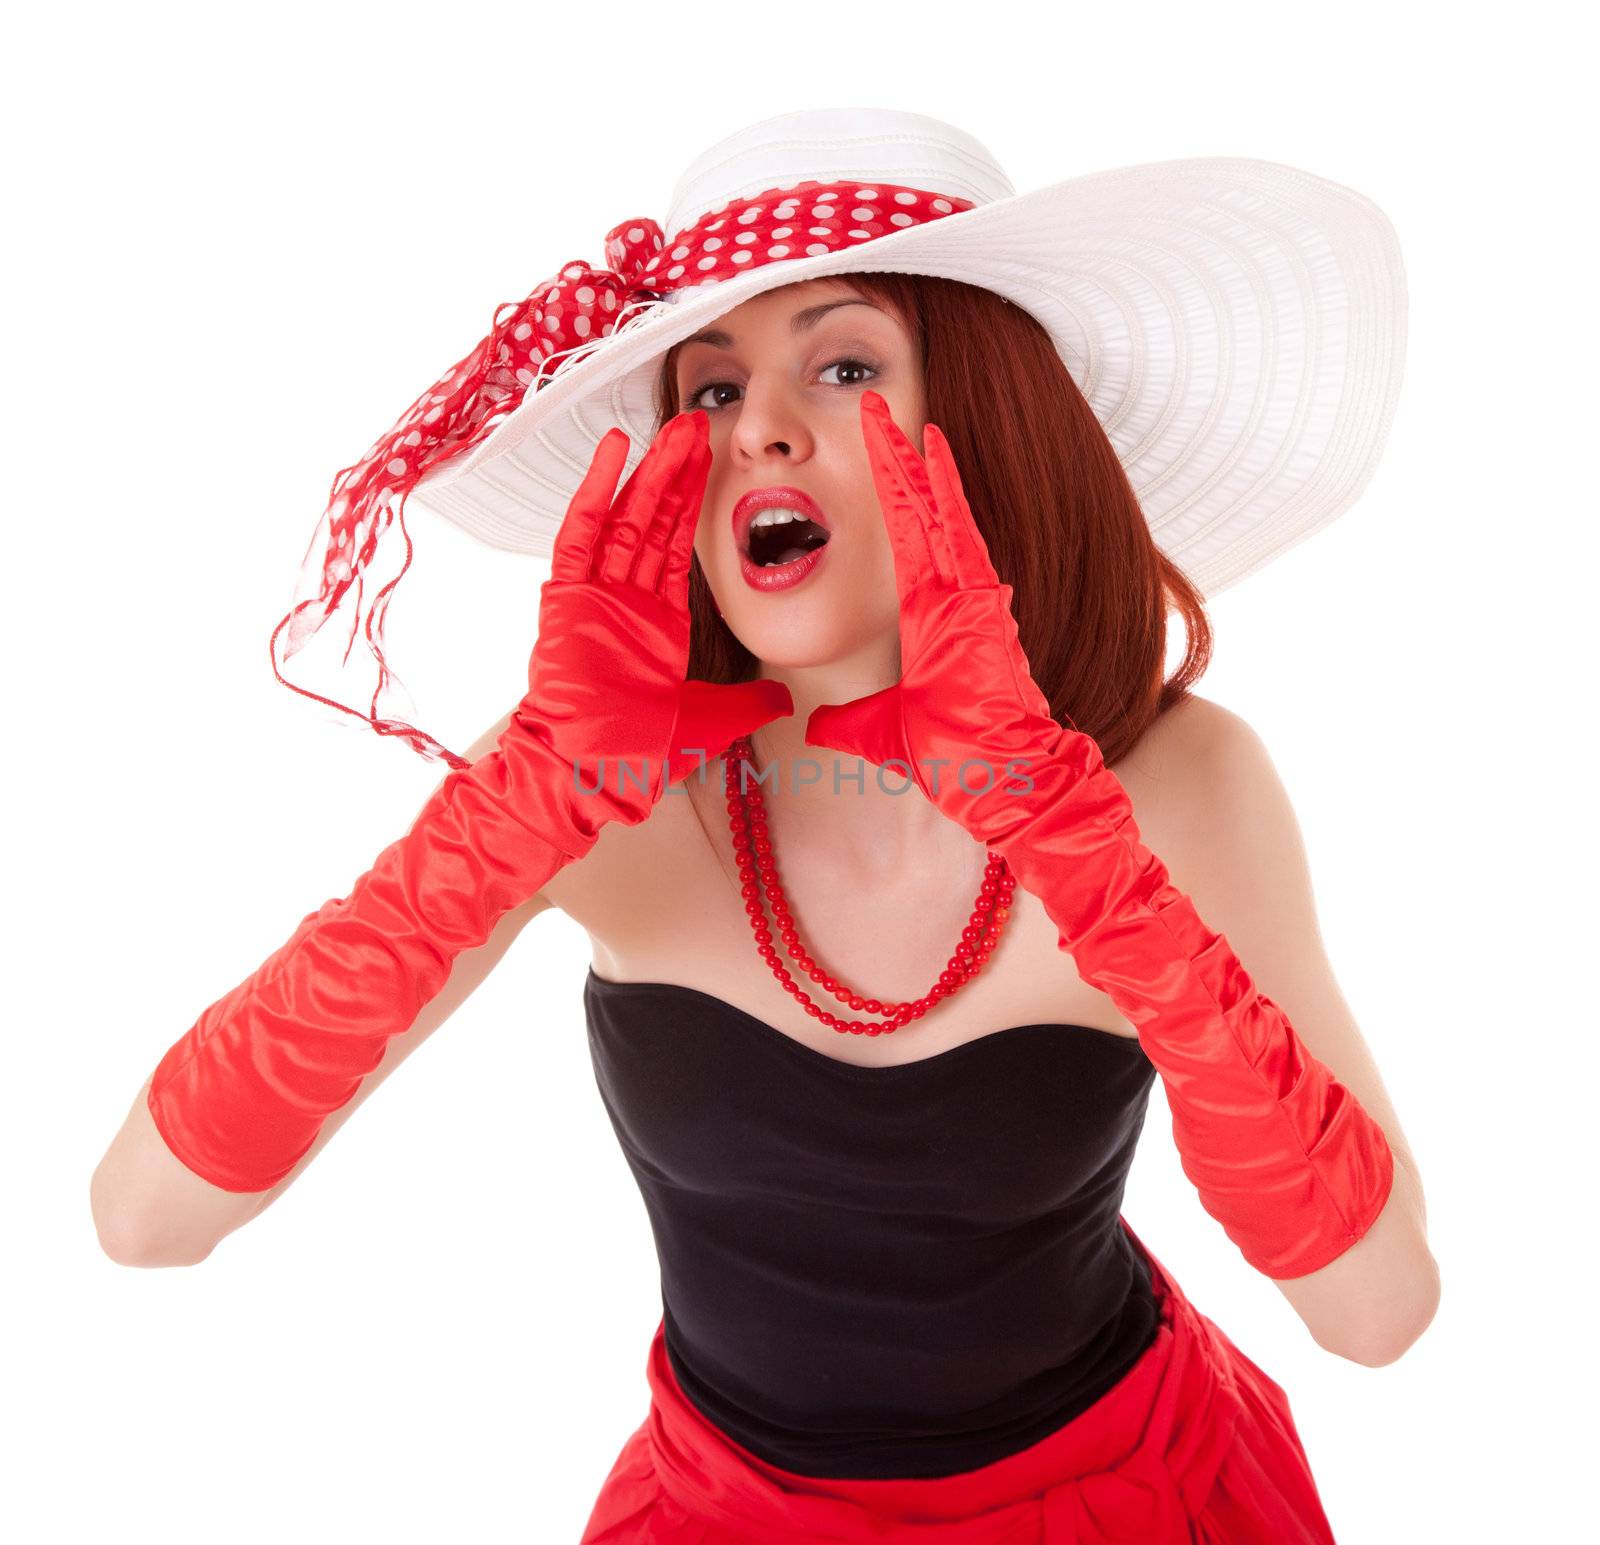 Shouting fashion girl in retro style with big hat by iryna_rasko